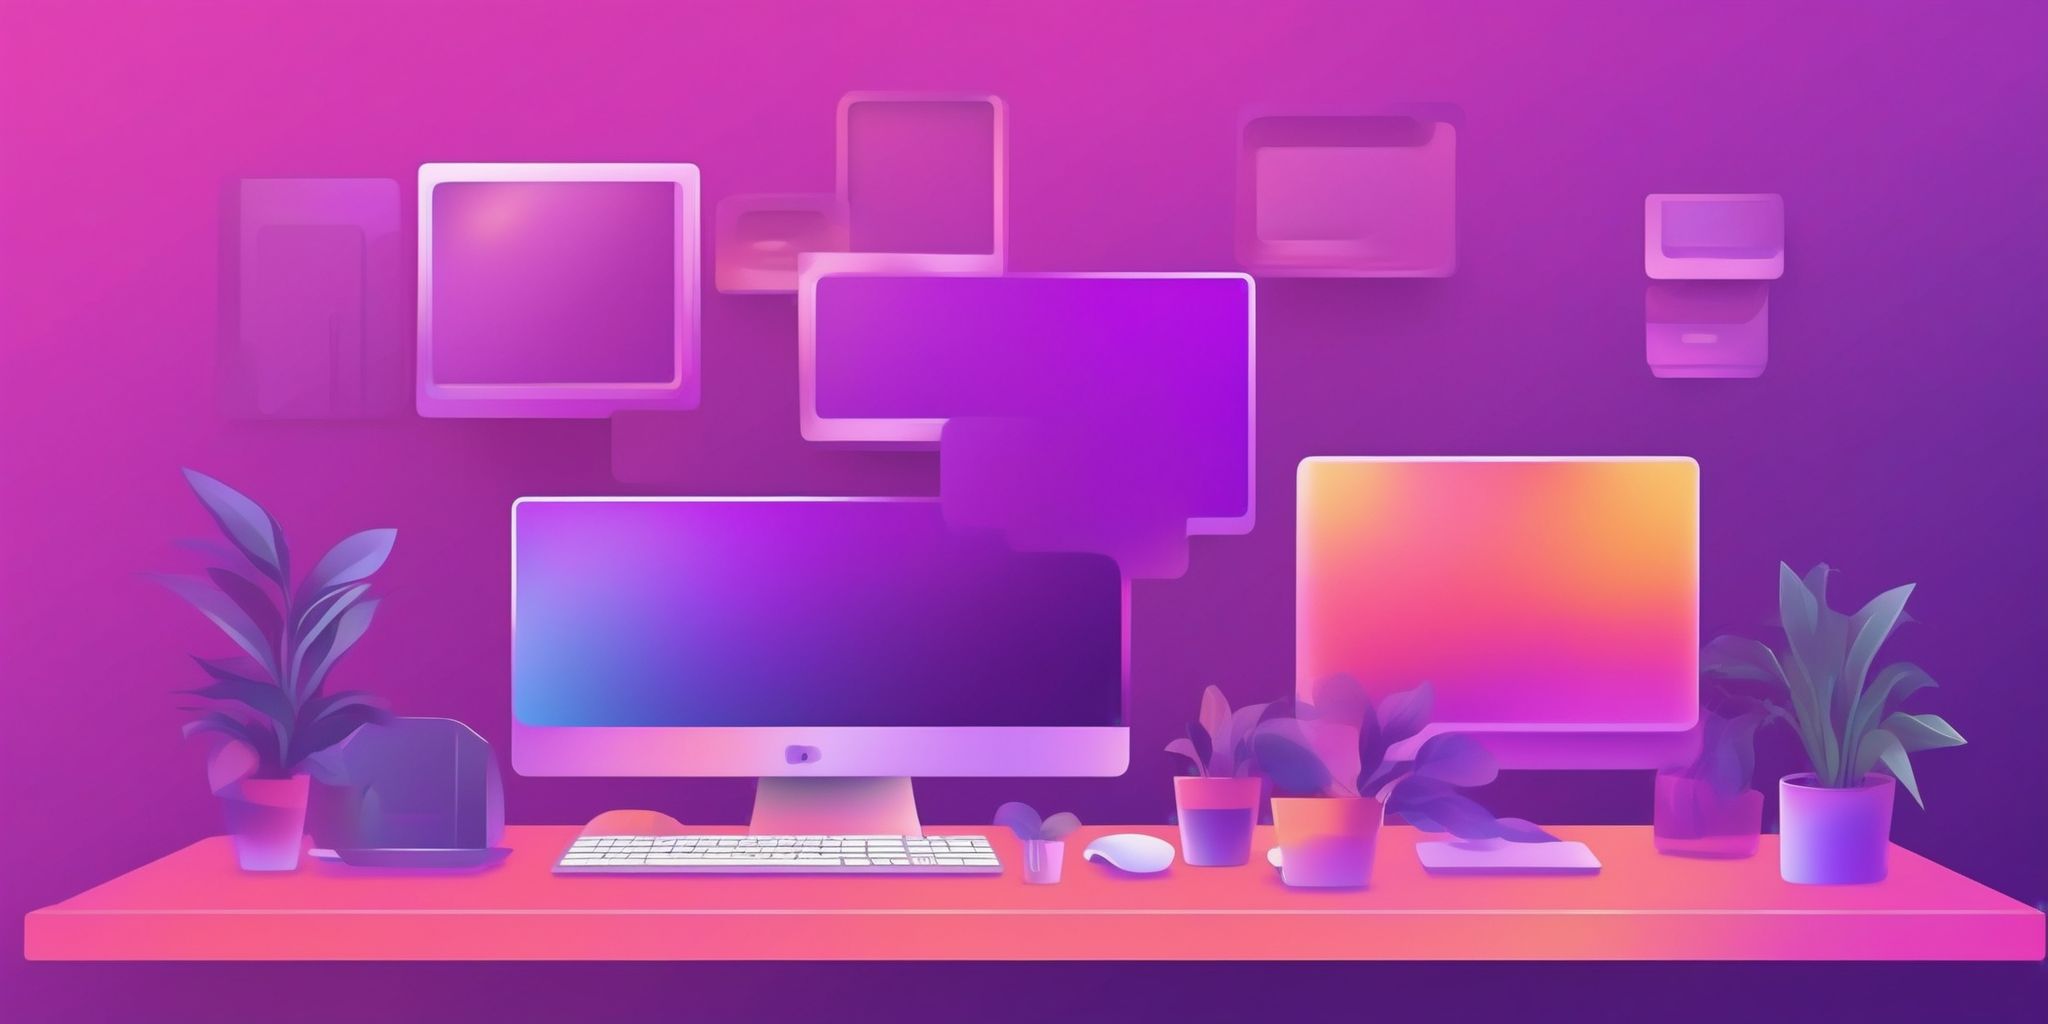 Desktop in flat illustration style, colorful purple gradient colors